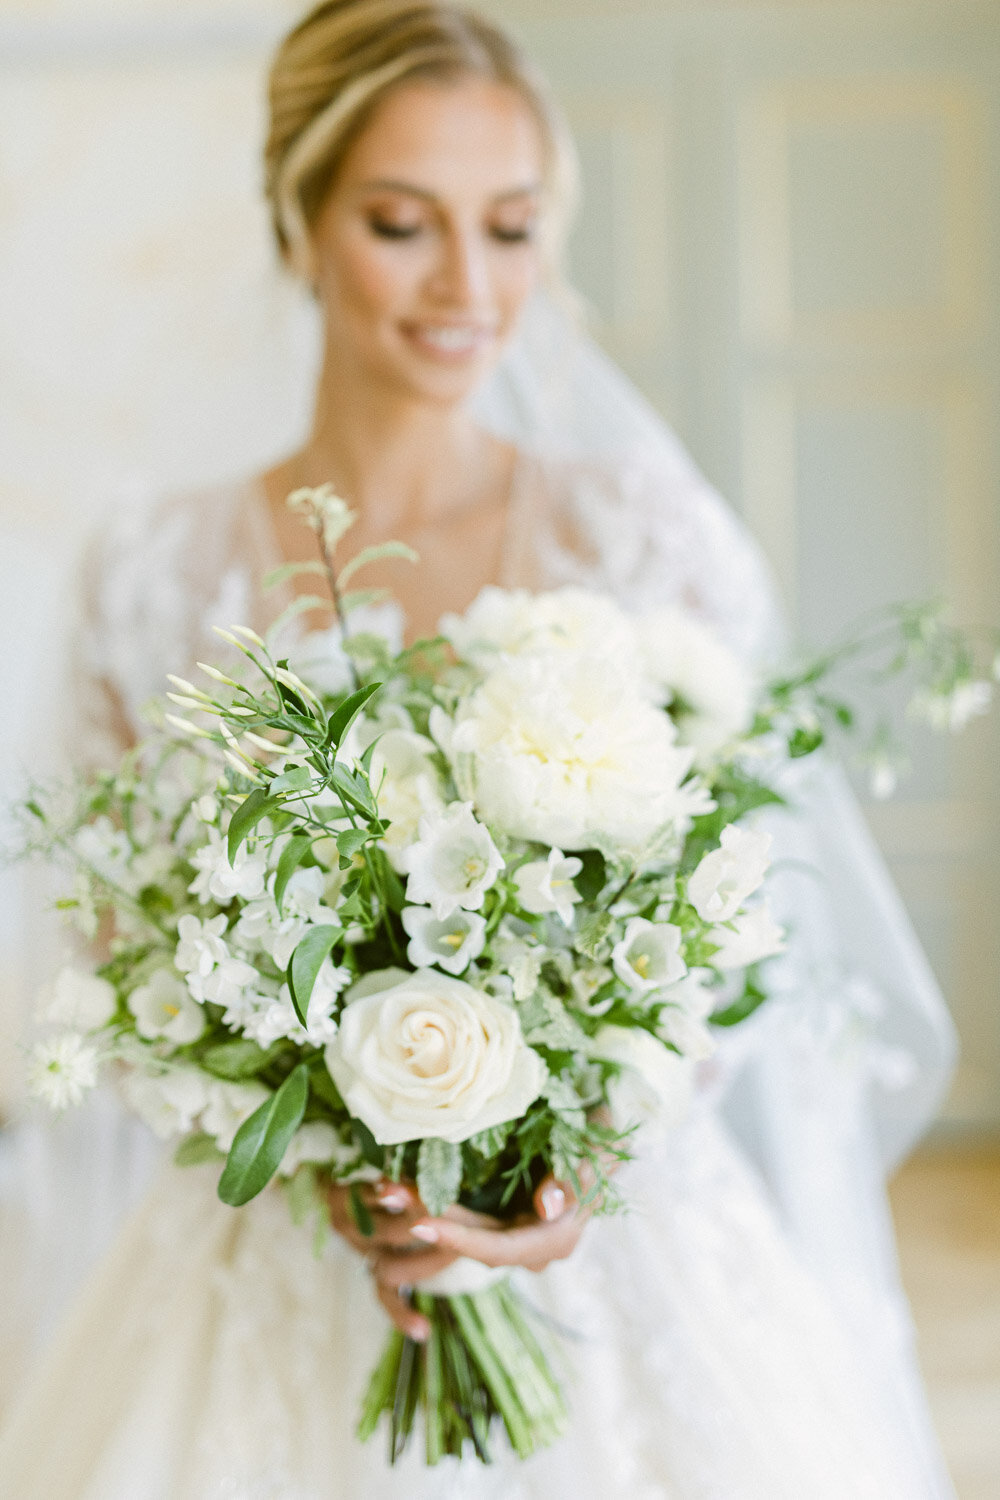 Bride's elegant wedding bouquet